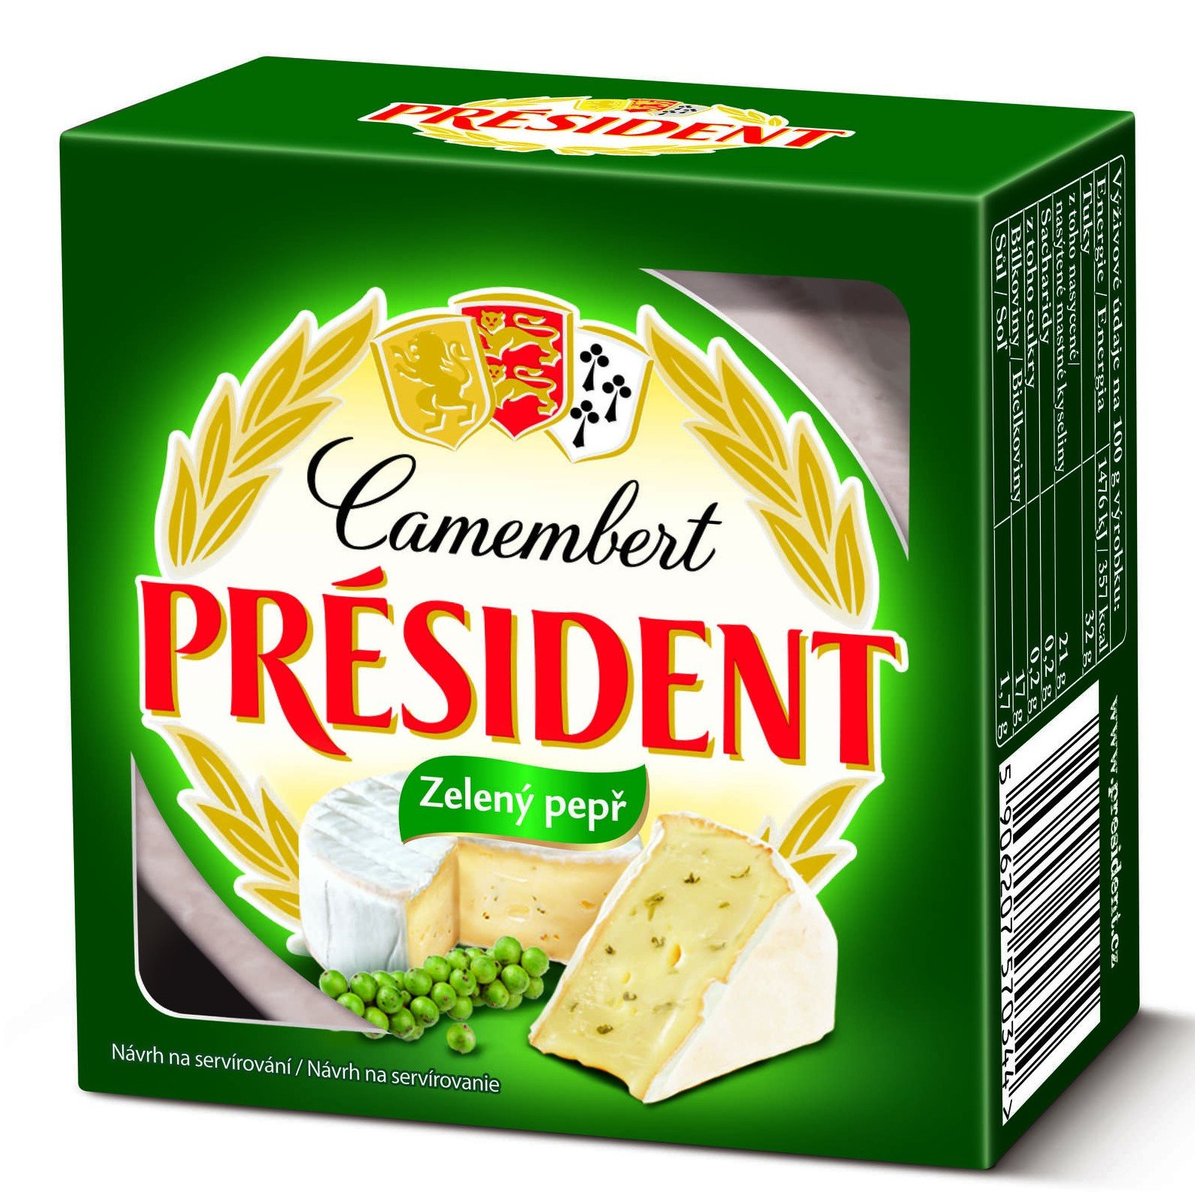 Président Camembert zelený pepř